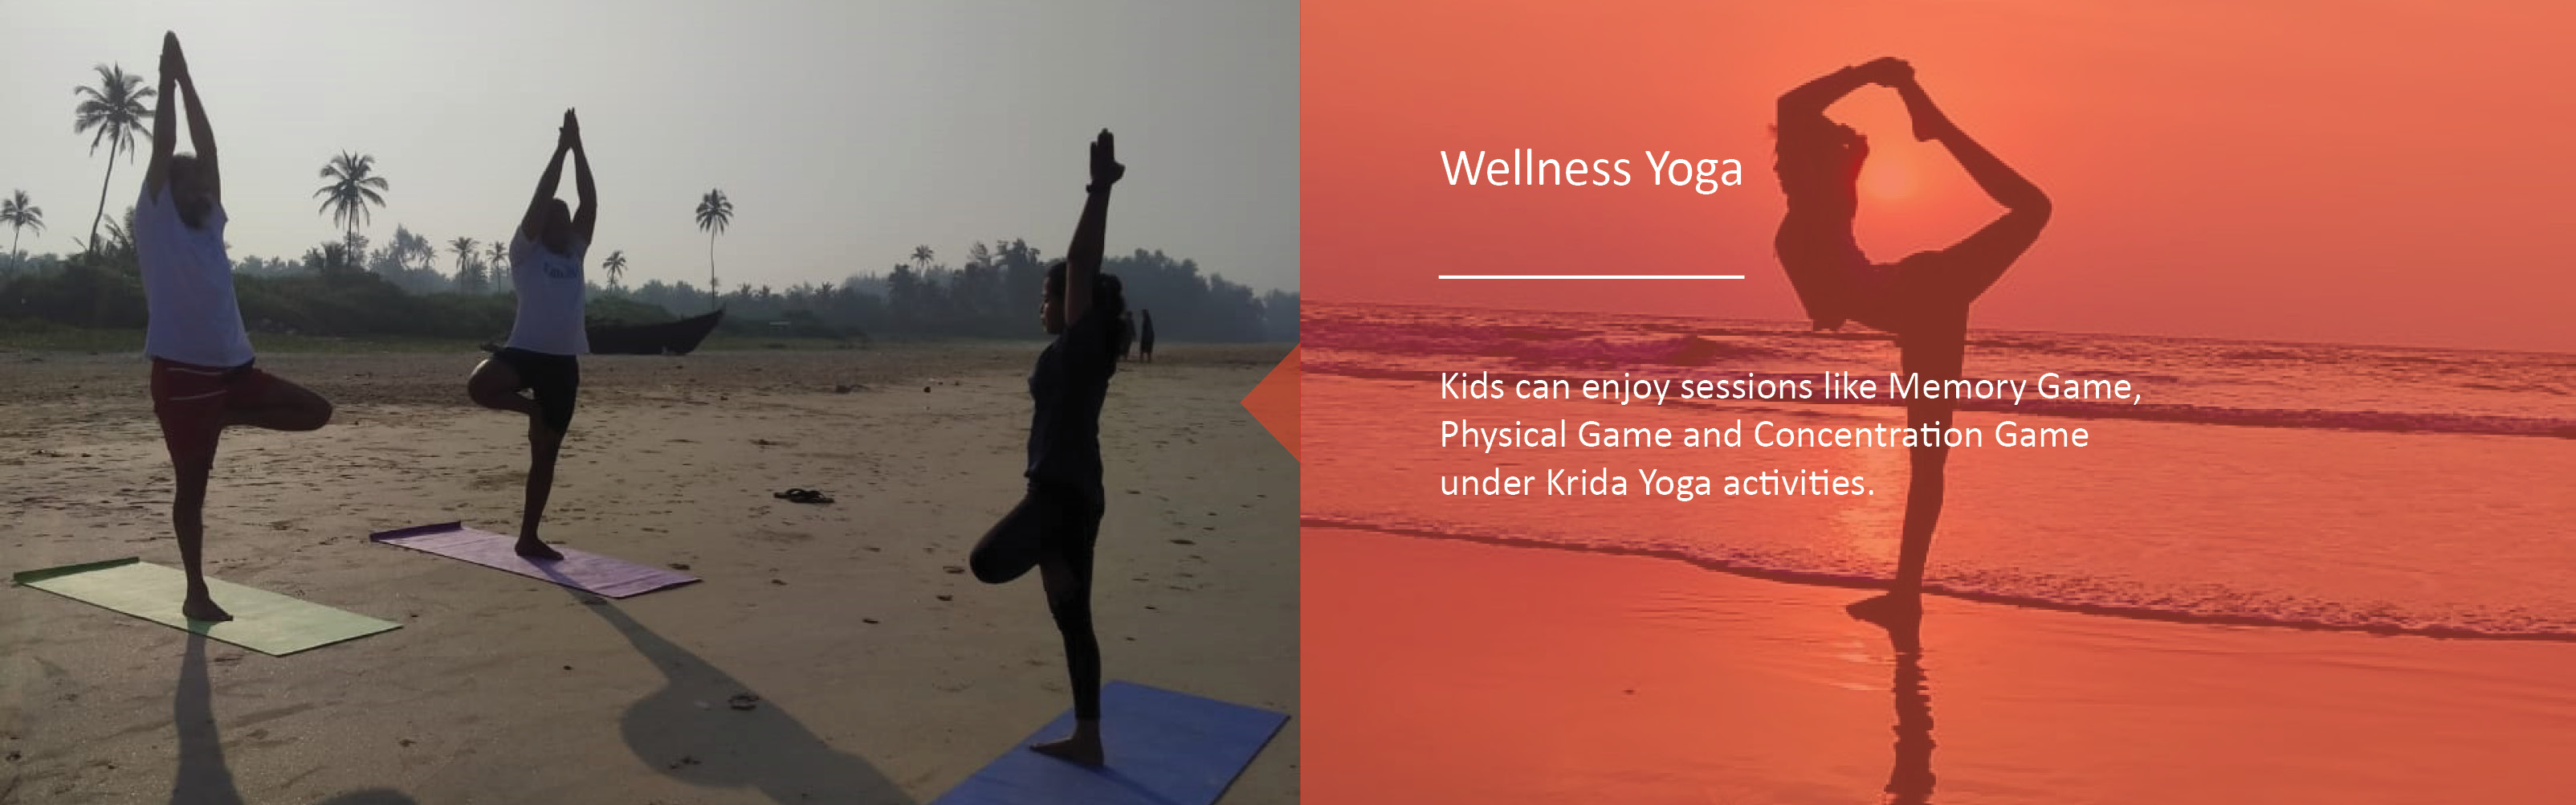 Yoga Wellness Retreats in India